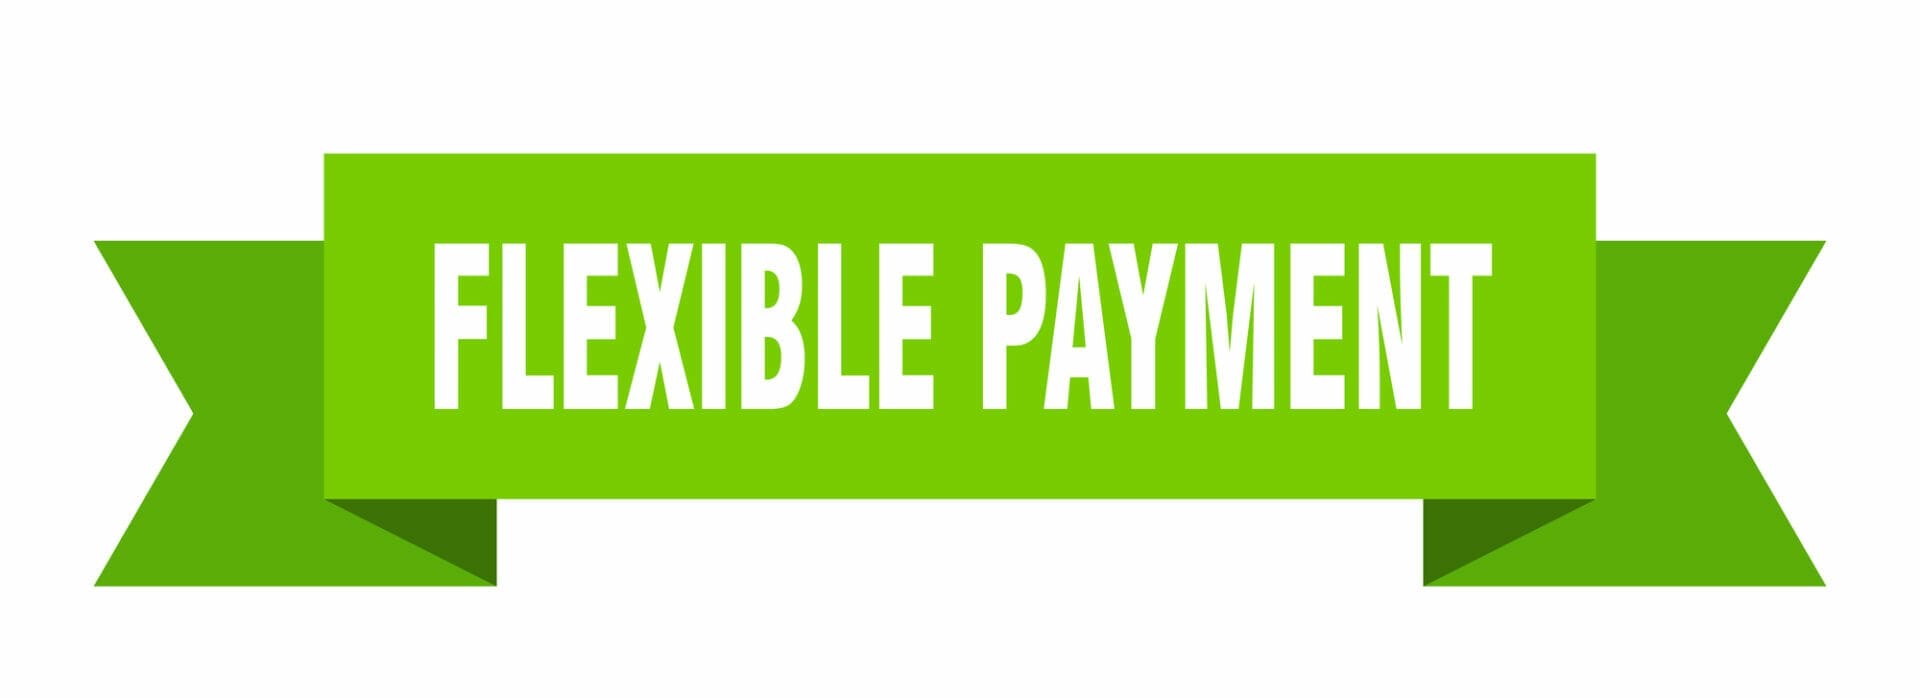 flexible payment sign for bail bonds